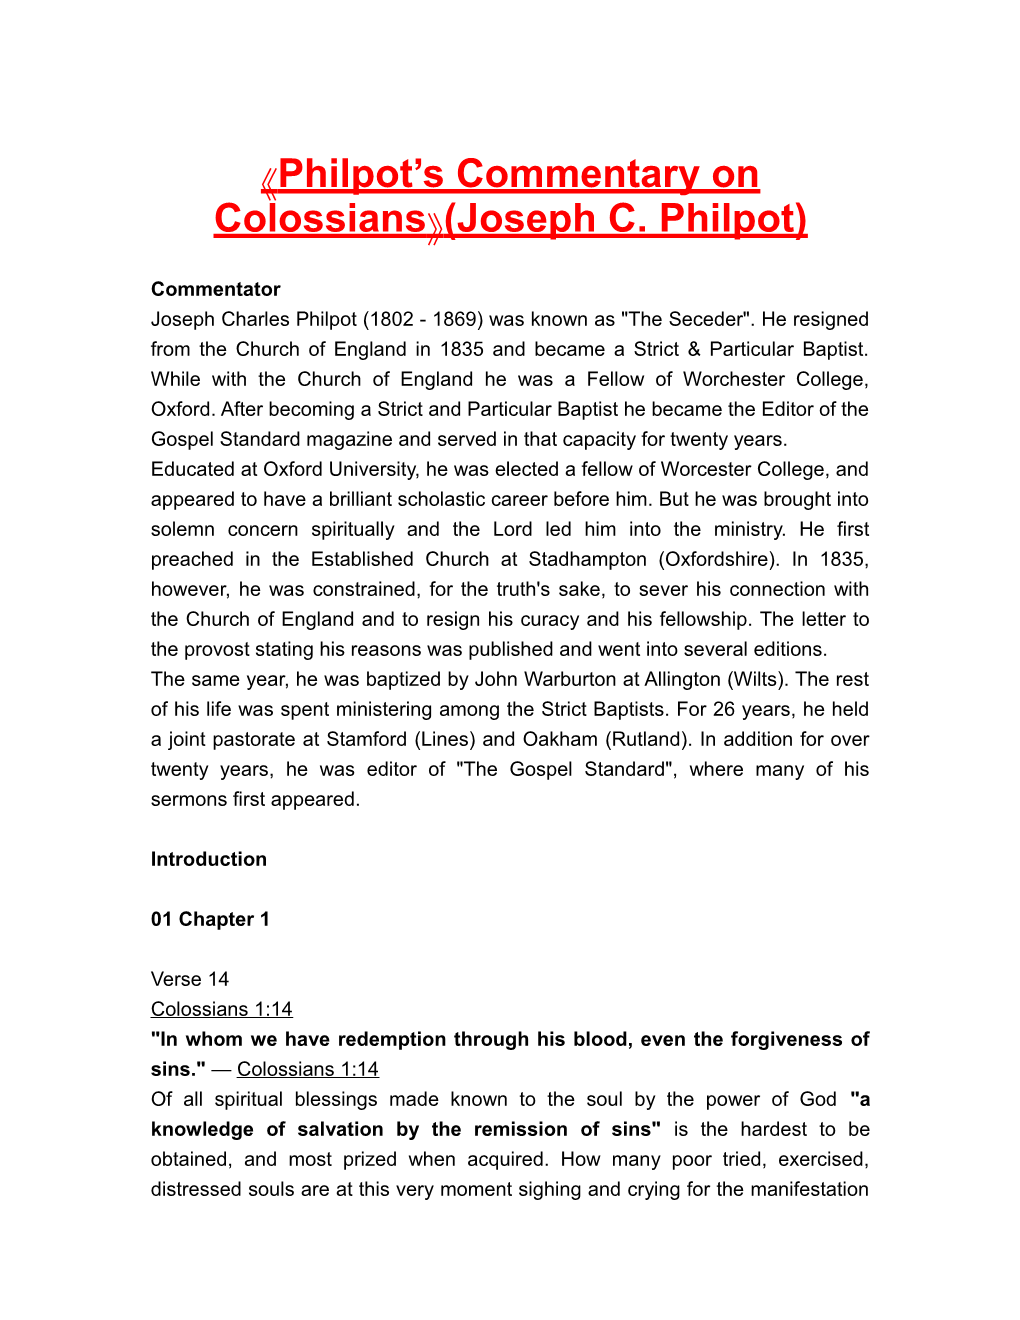 Philpot S Commentaryoncolossians (Joseph C. Philpot)